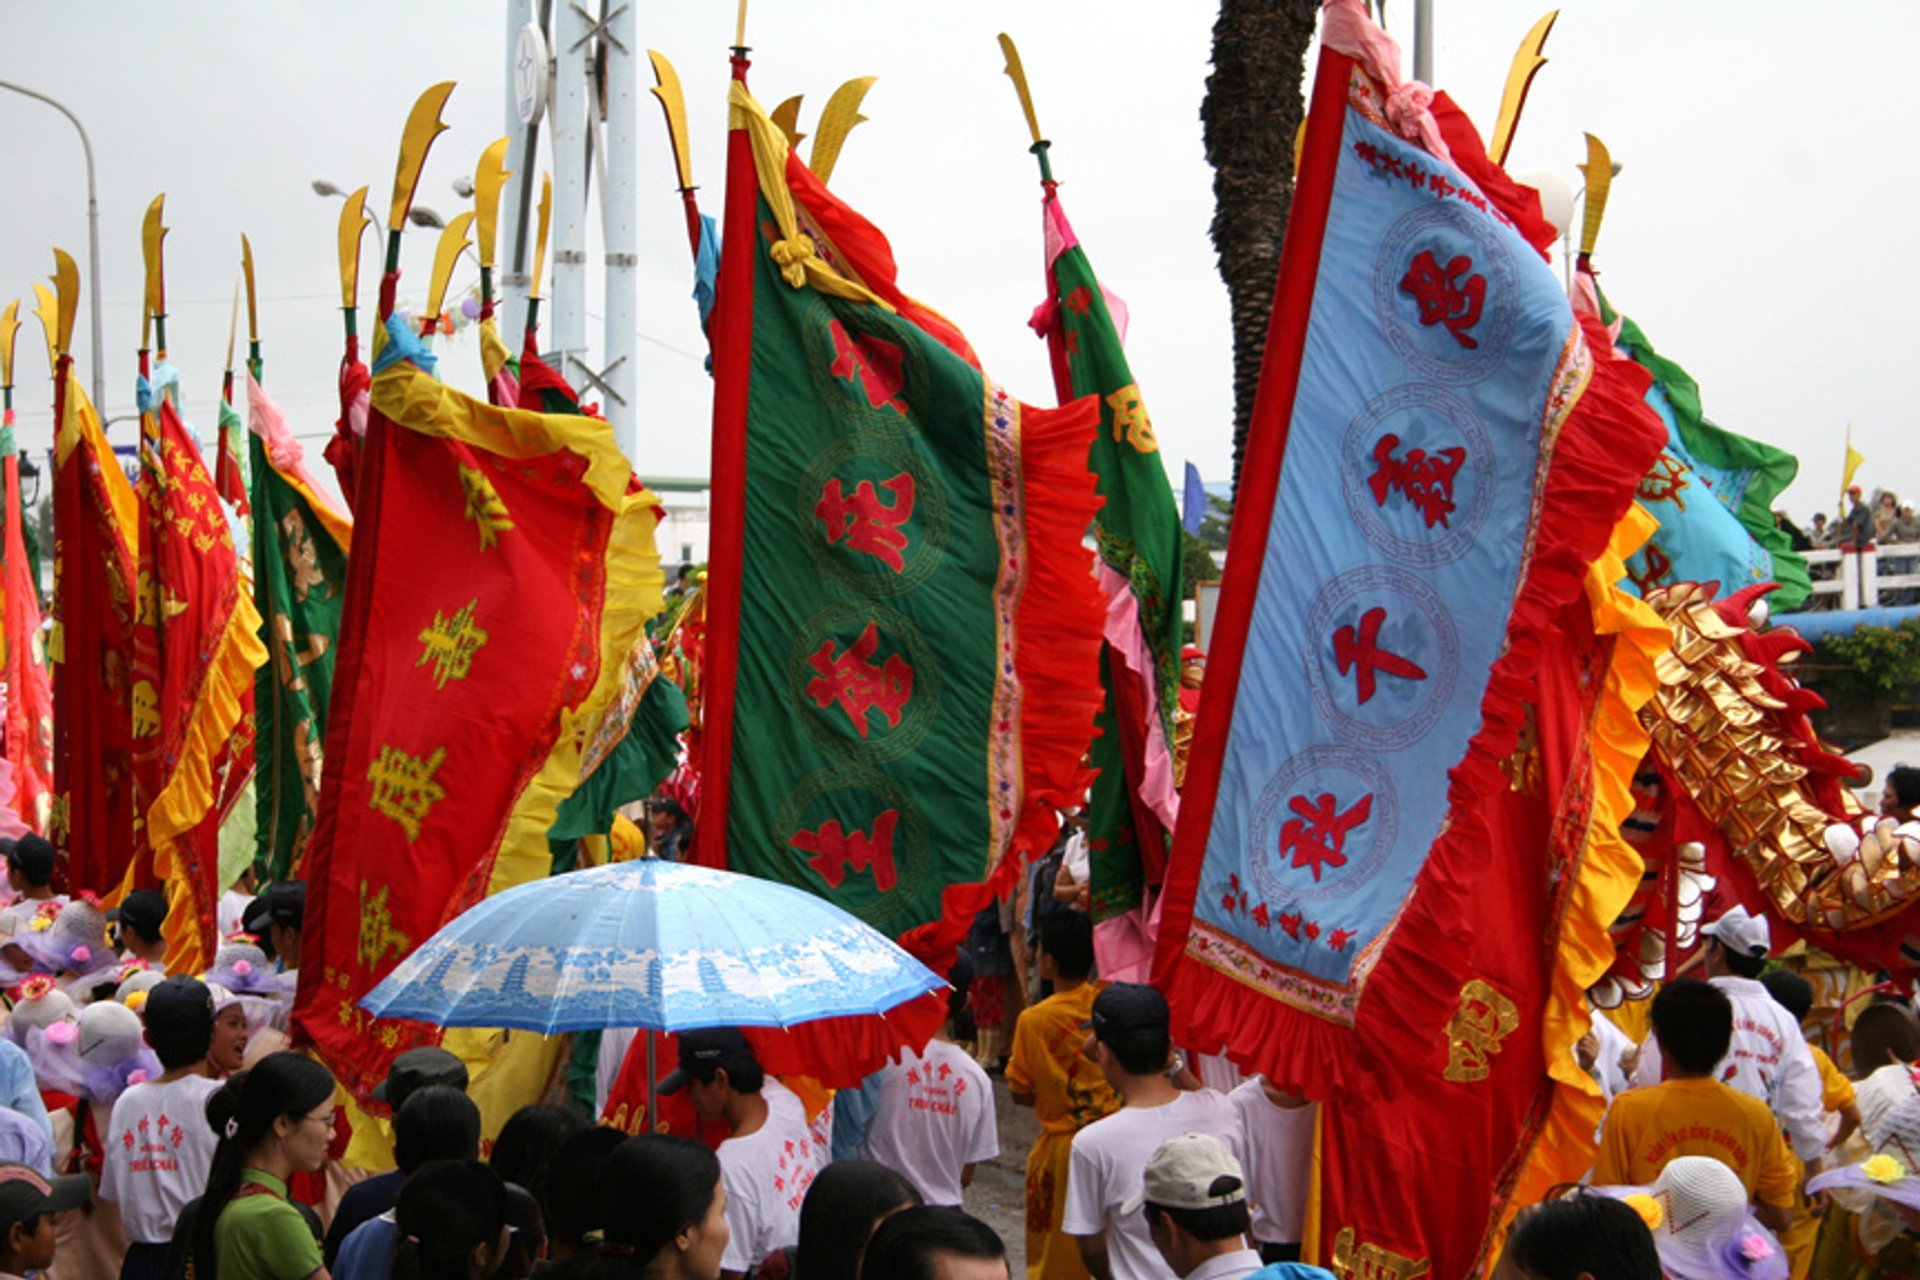 Nghinh Ong Festival